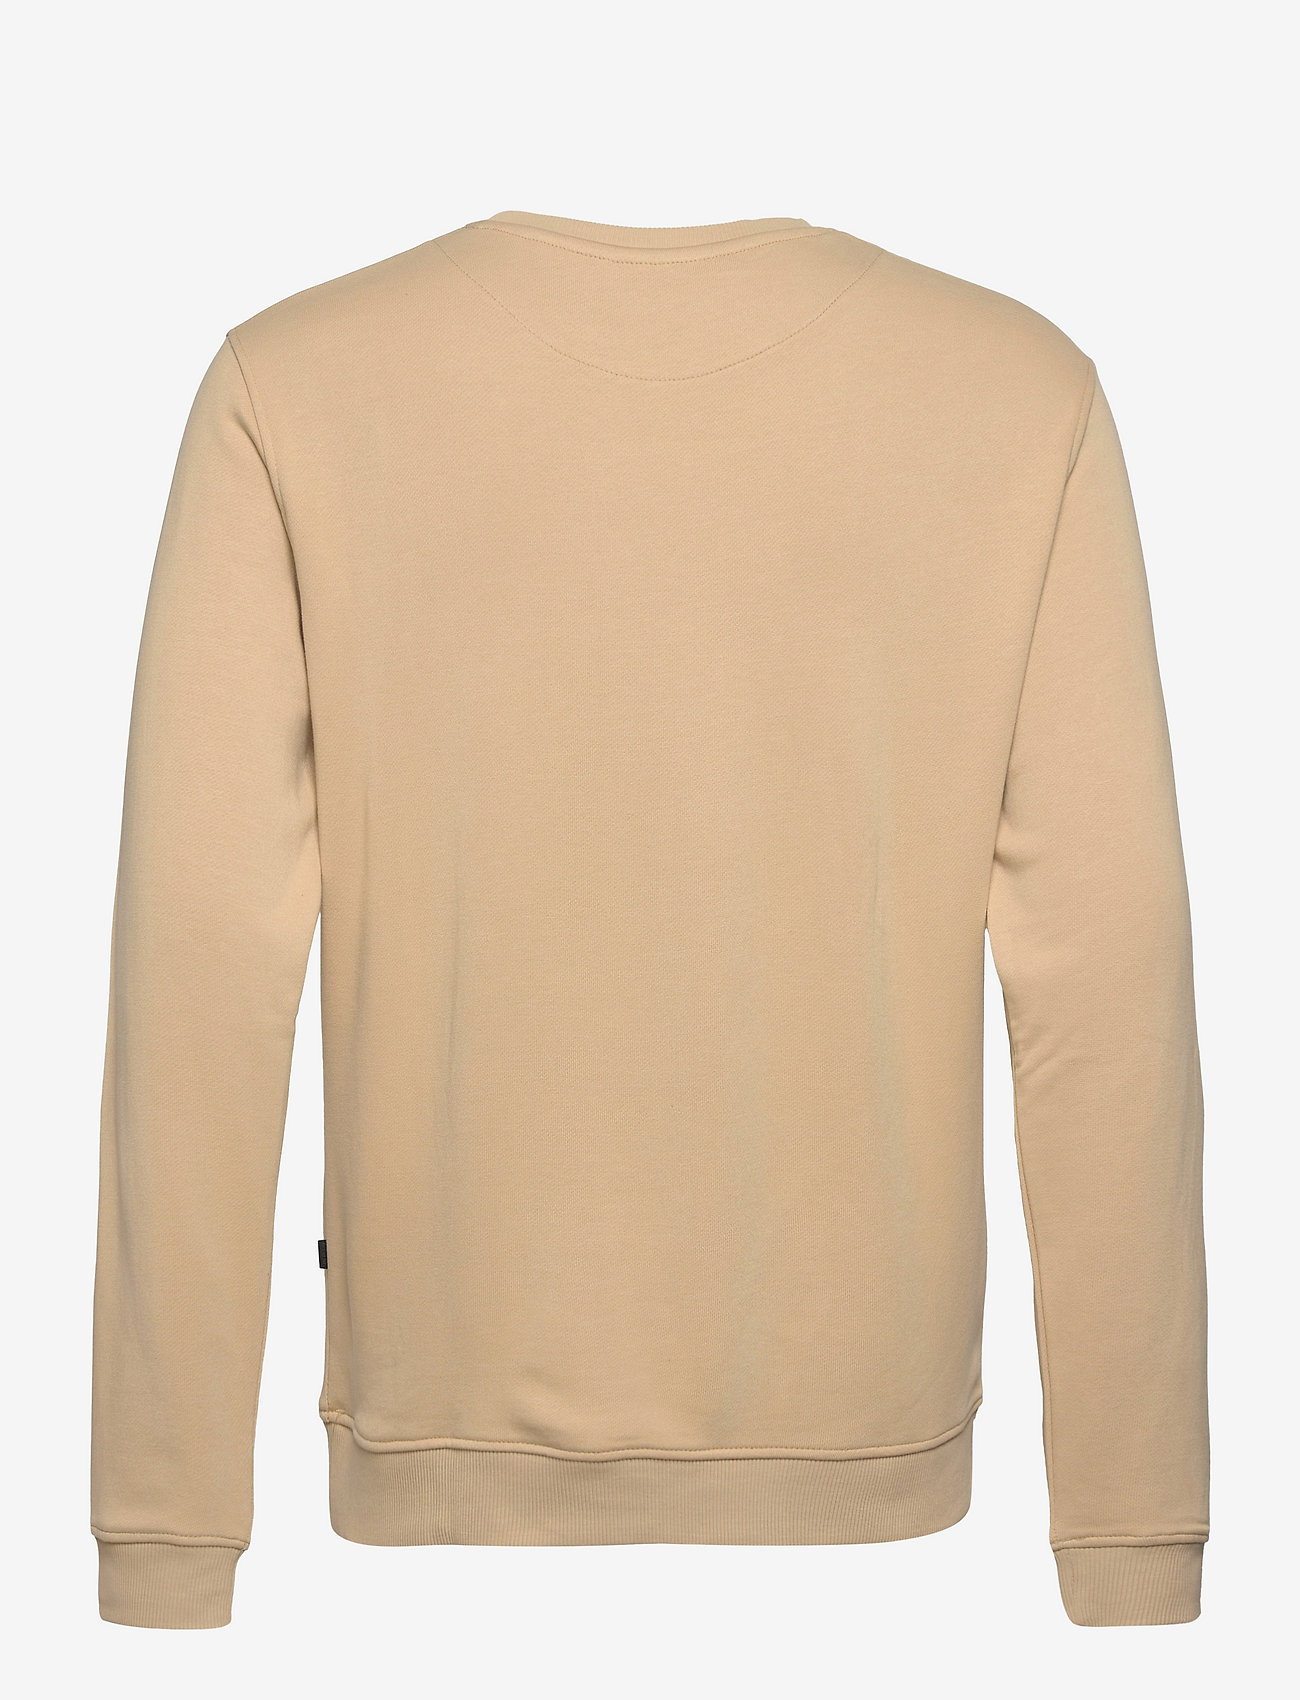 Resteröds - BAMBOO sweatshirt FSC - svetarit - beige - 1